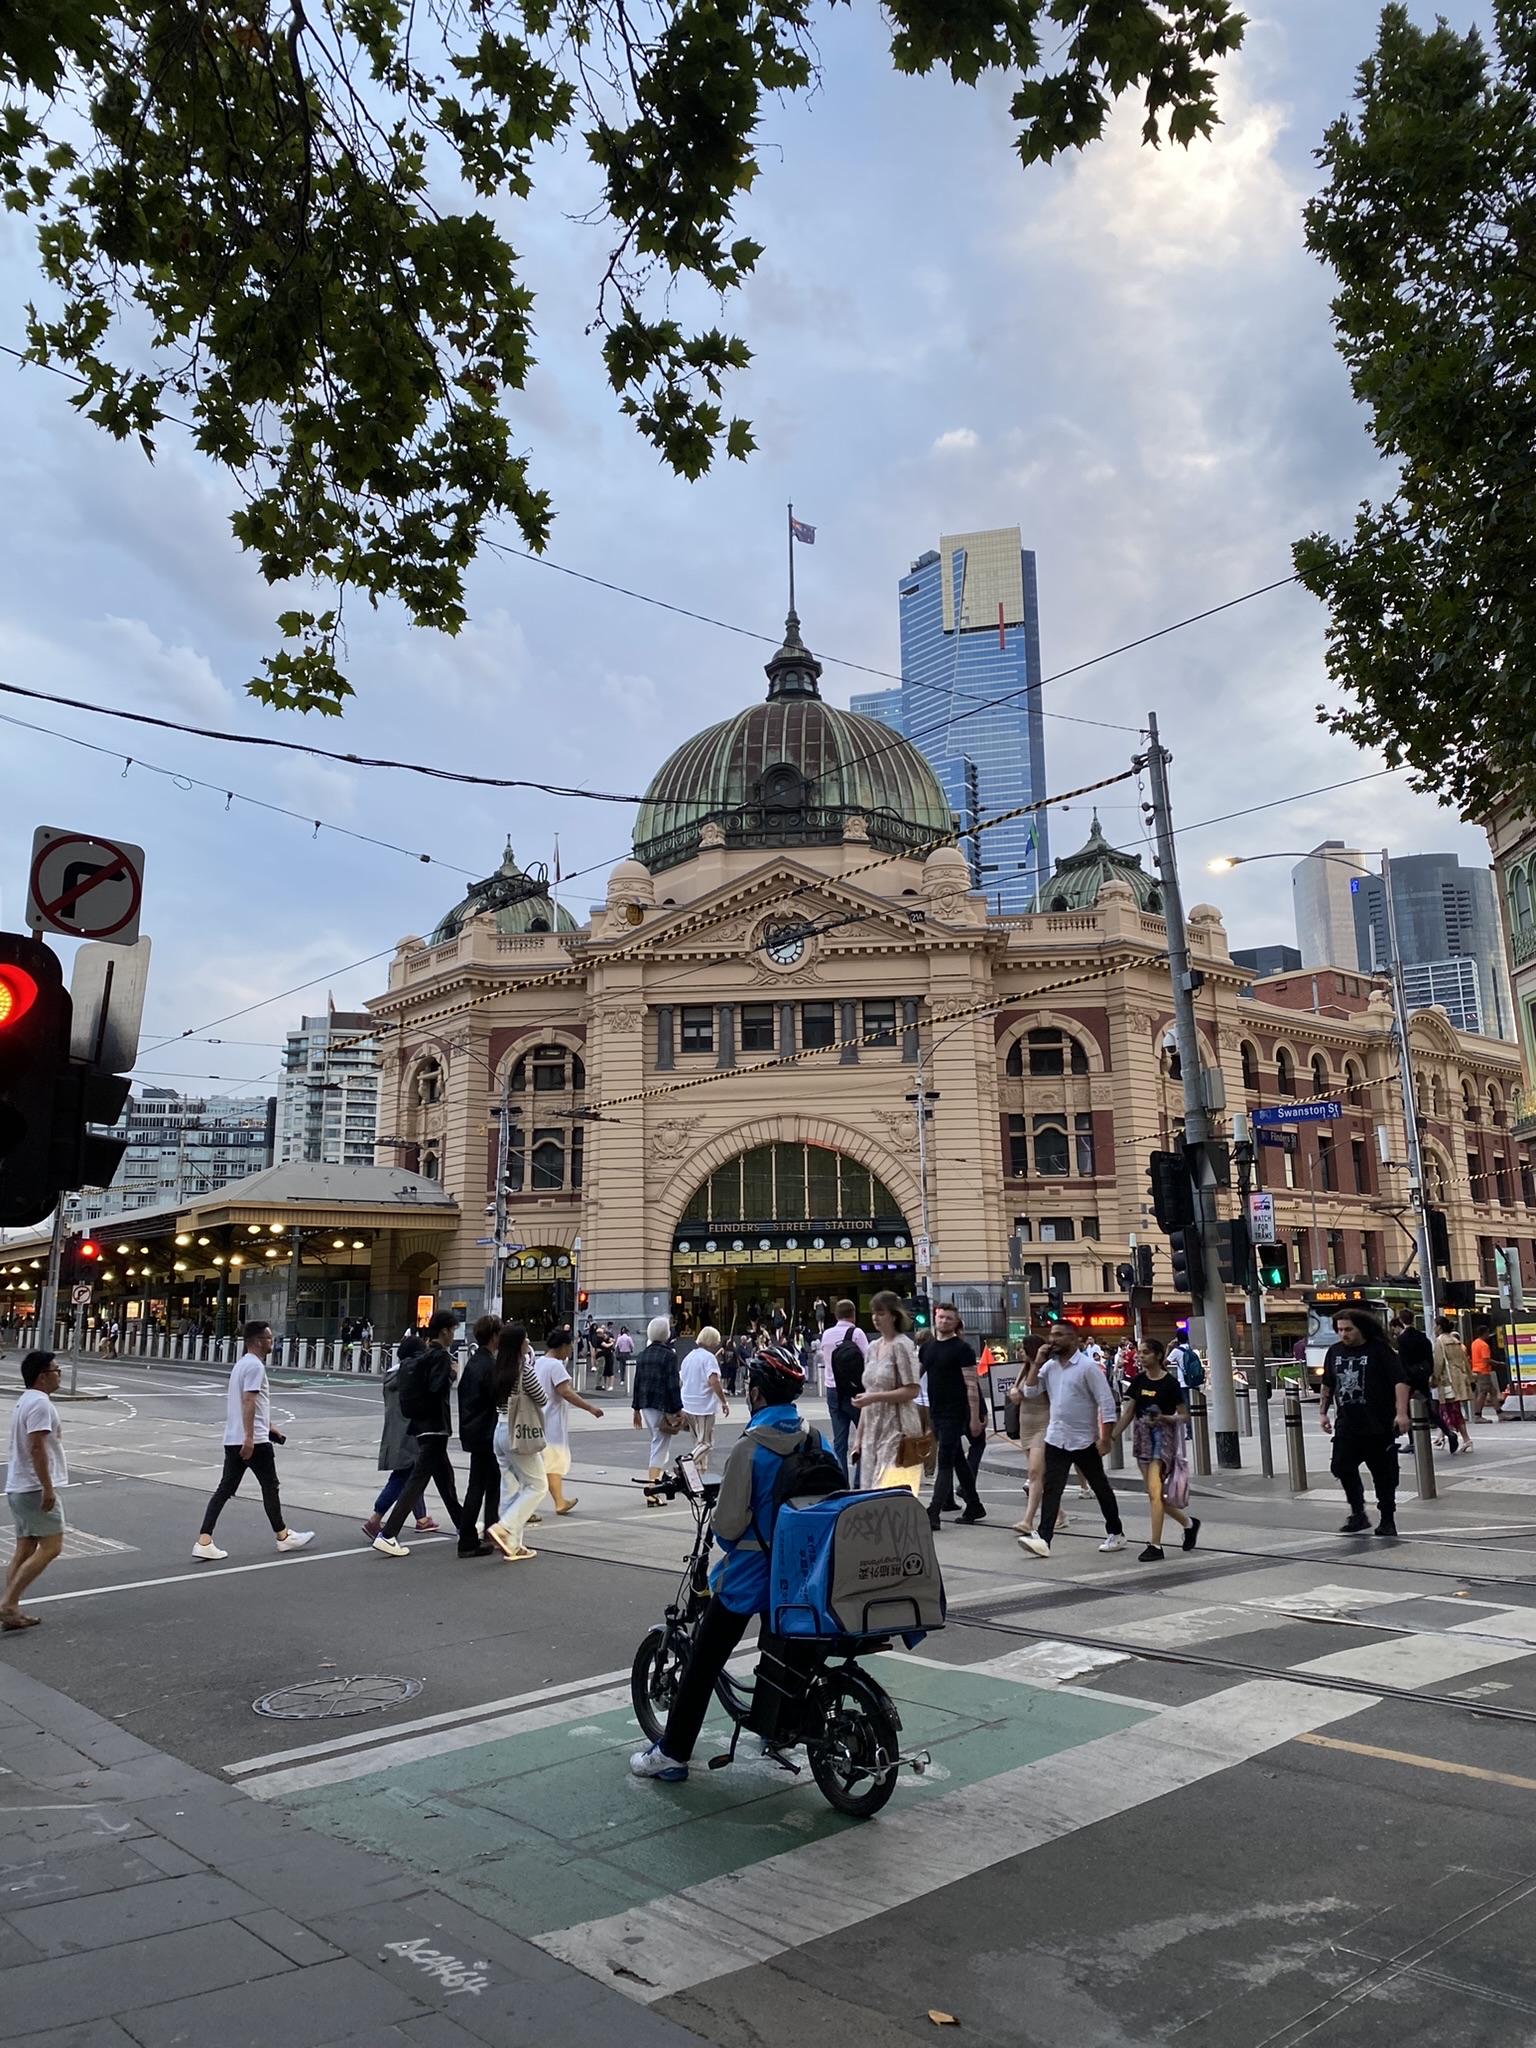 Iconic Flinders Street Station